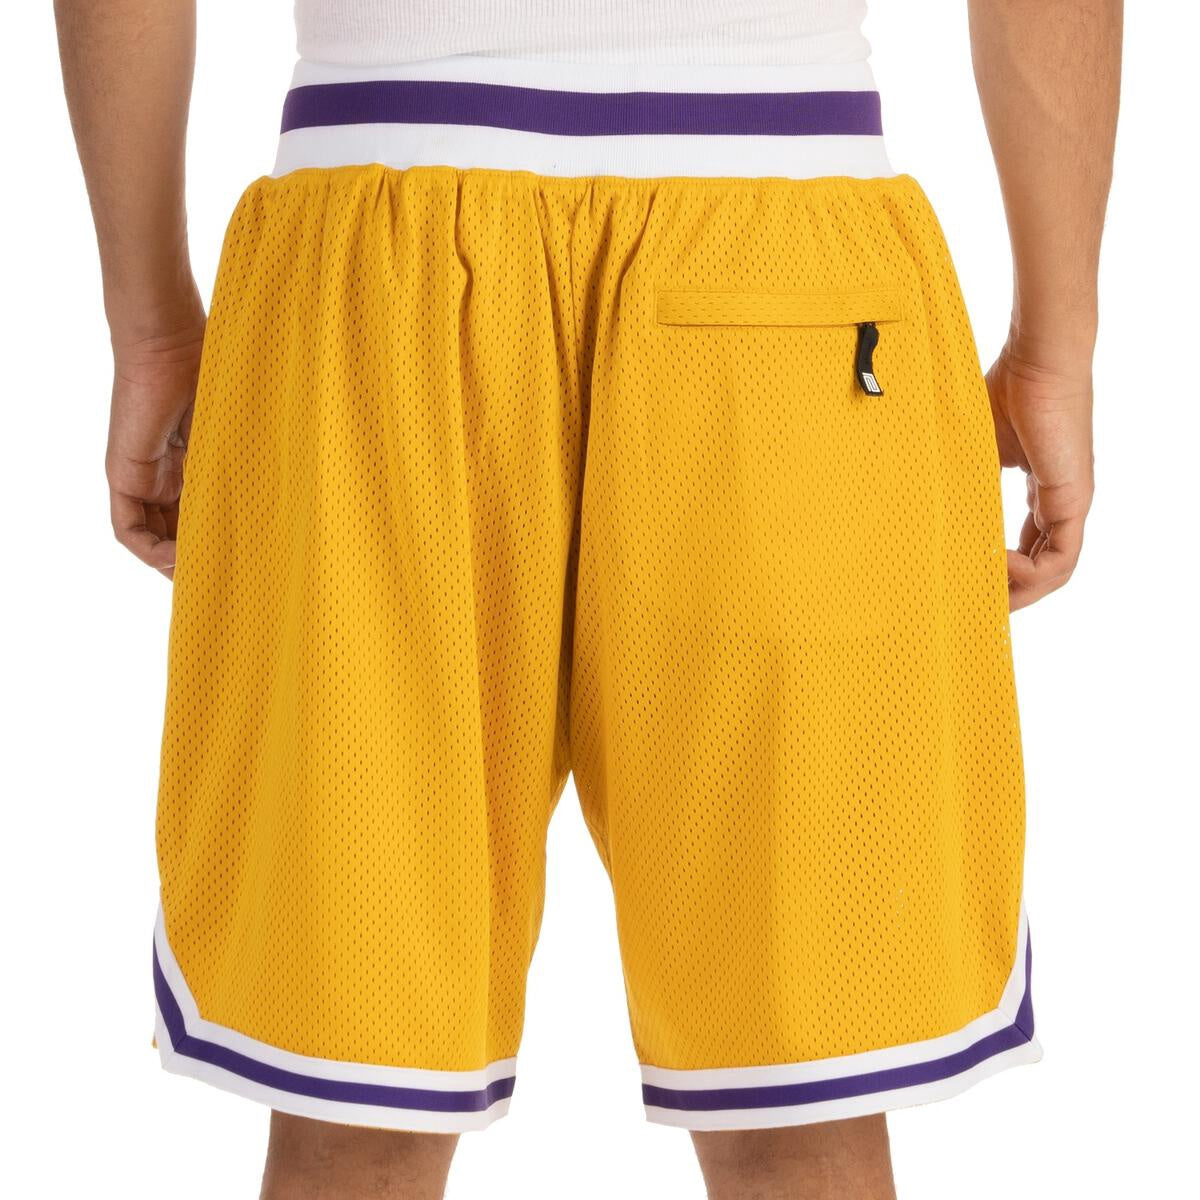 Pro Club  Classic Basketball Shorts - Yellow